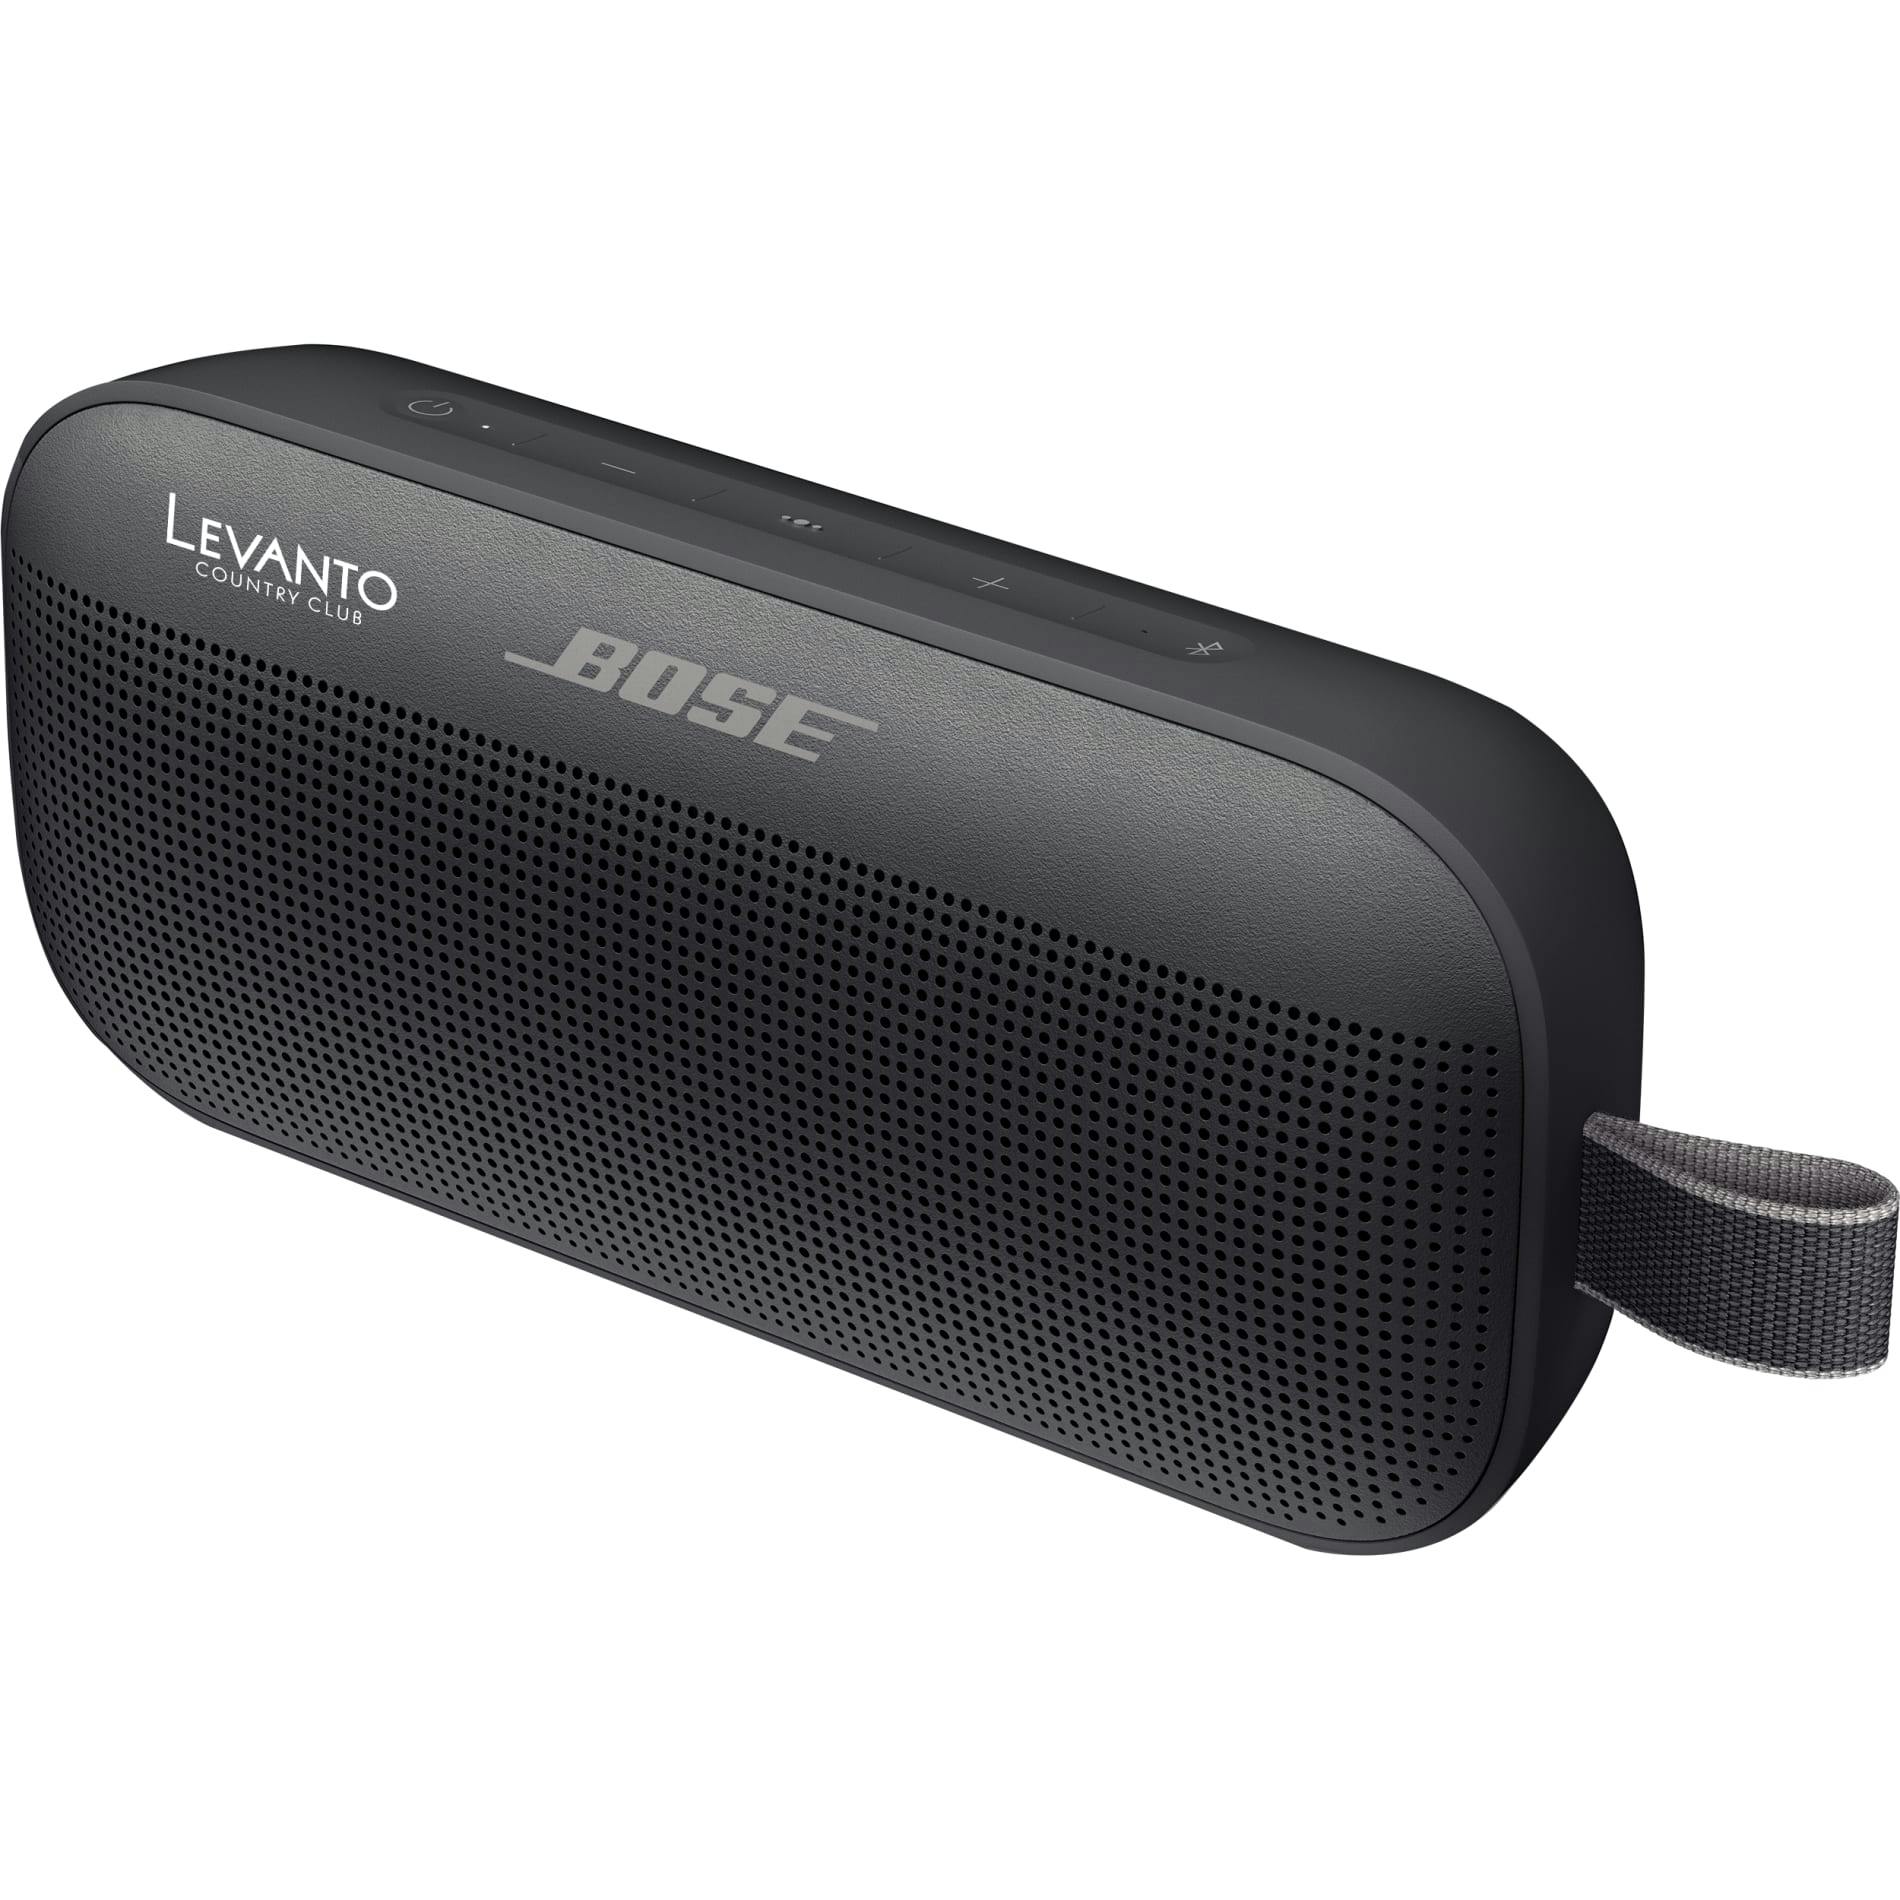 Bose Flex Bluetooth Speaker - additional Image 4